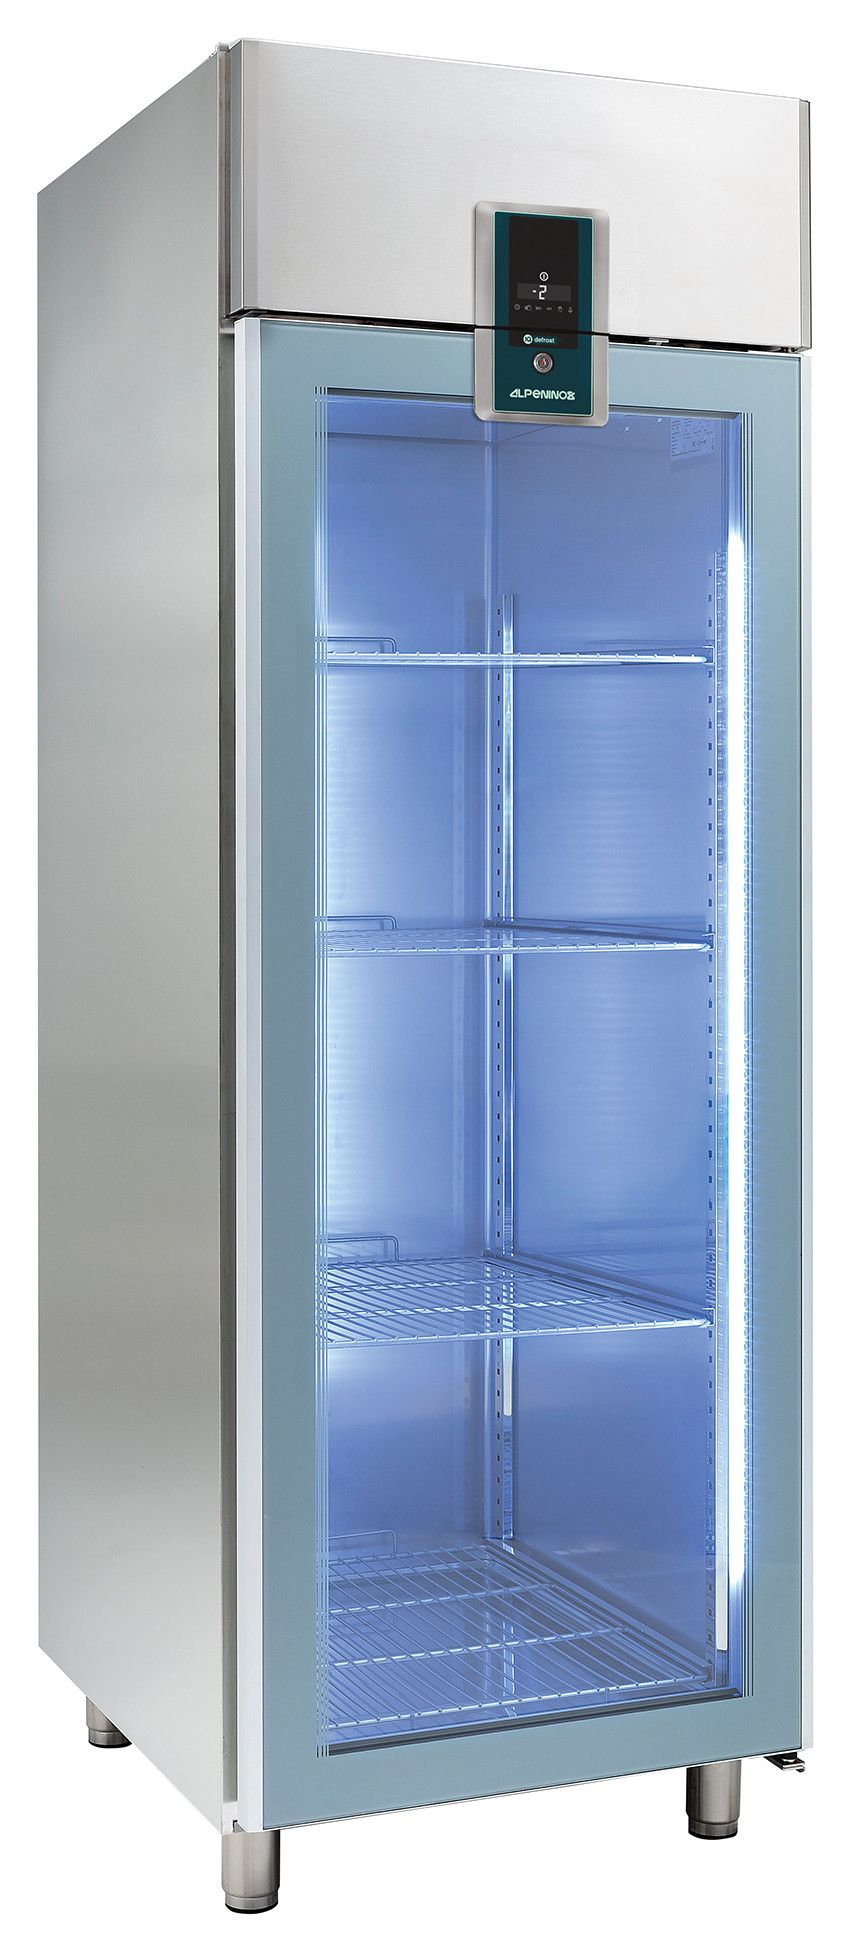 Alpeninox Glastürkühlschrank KU 702-G Premium